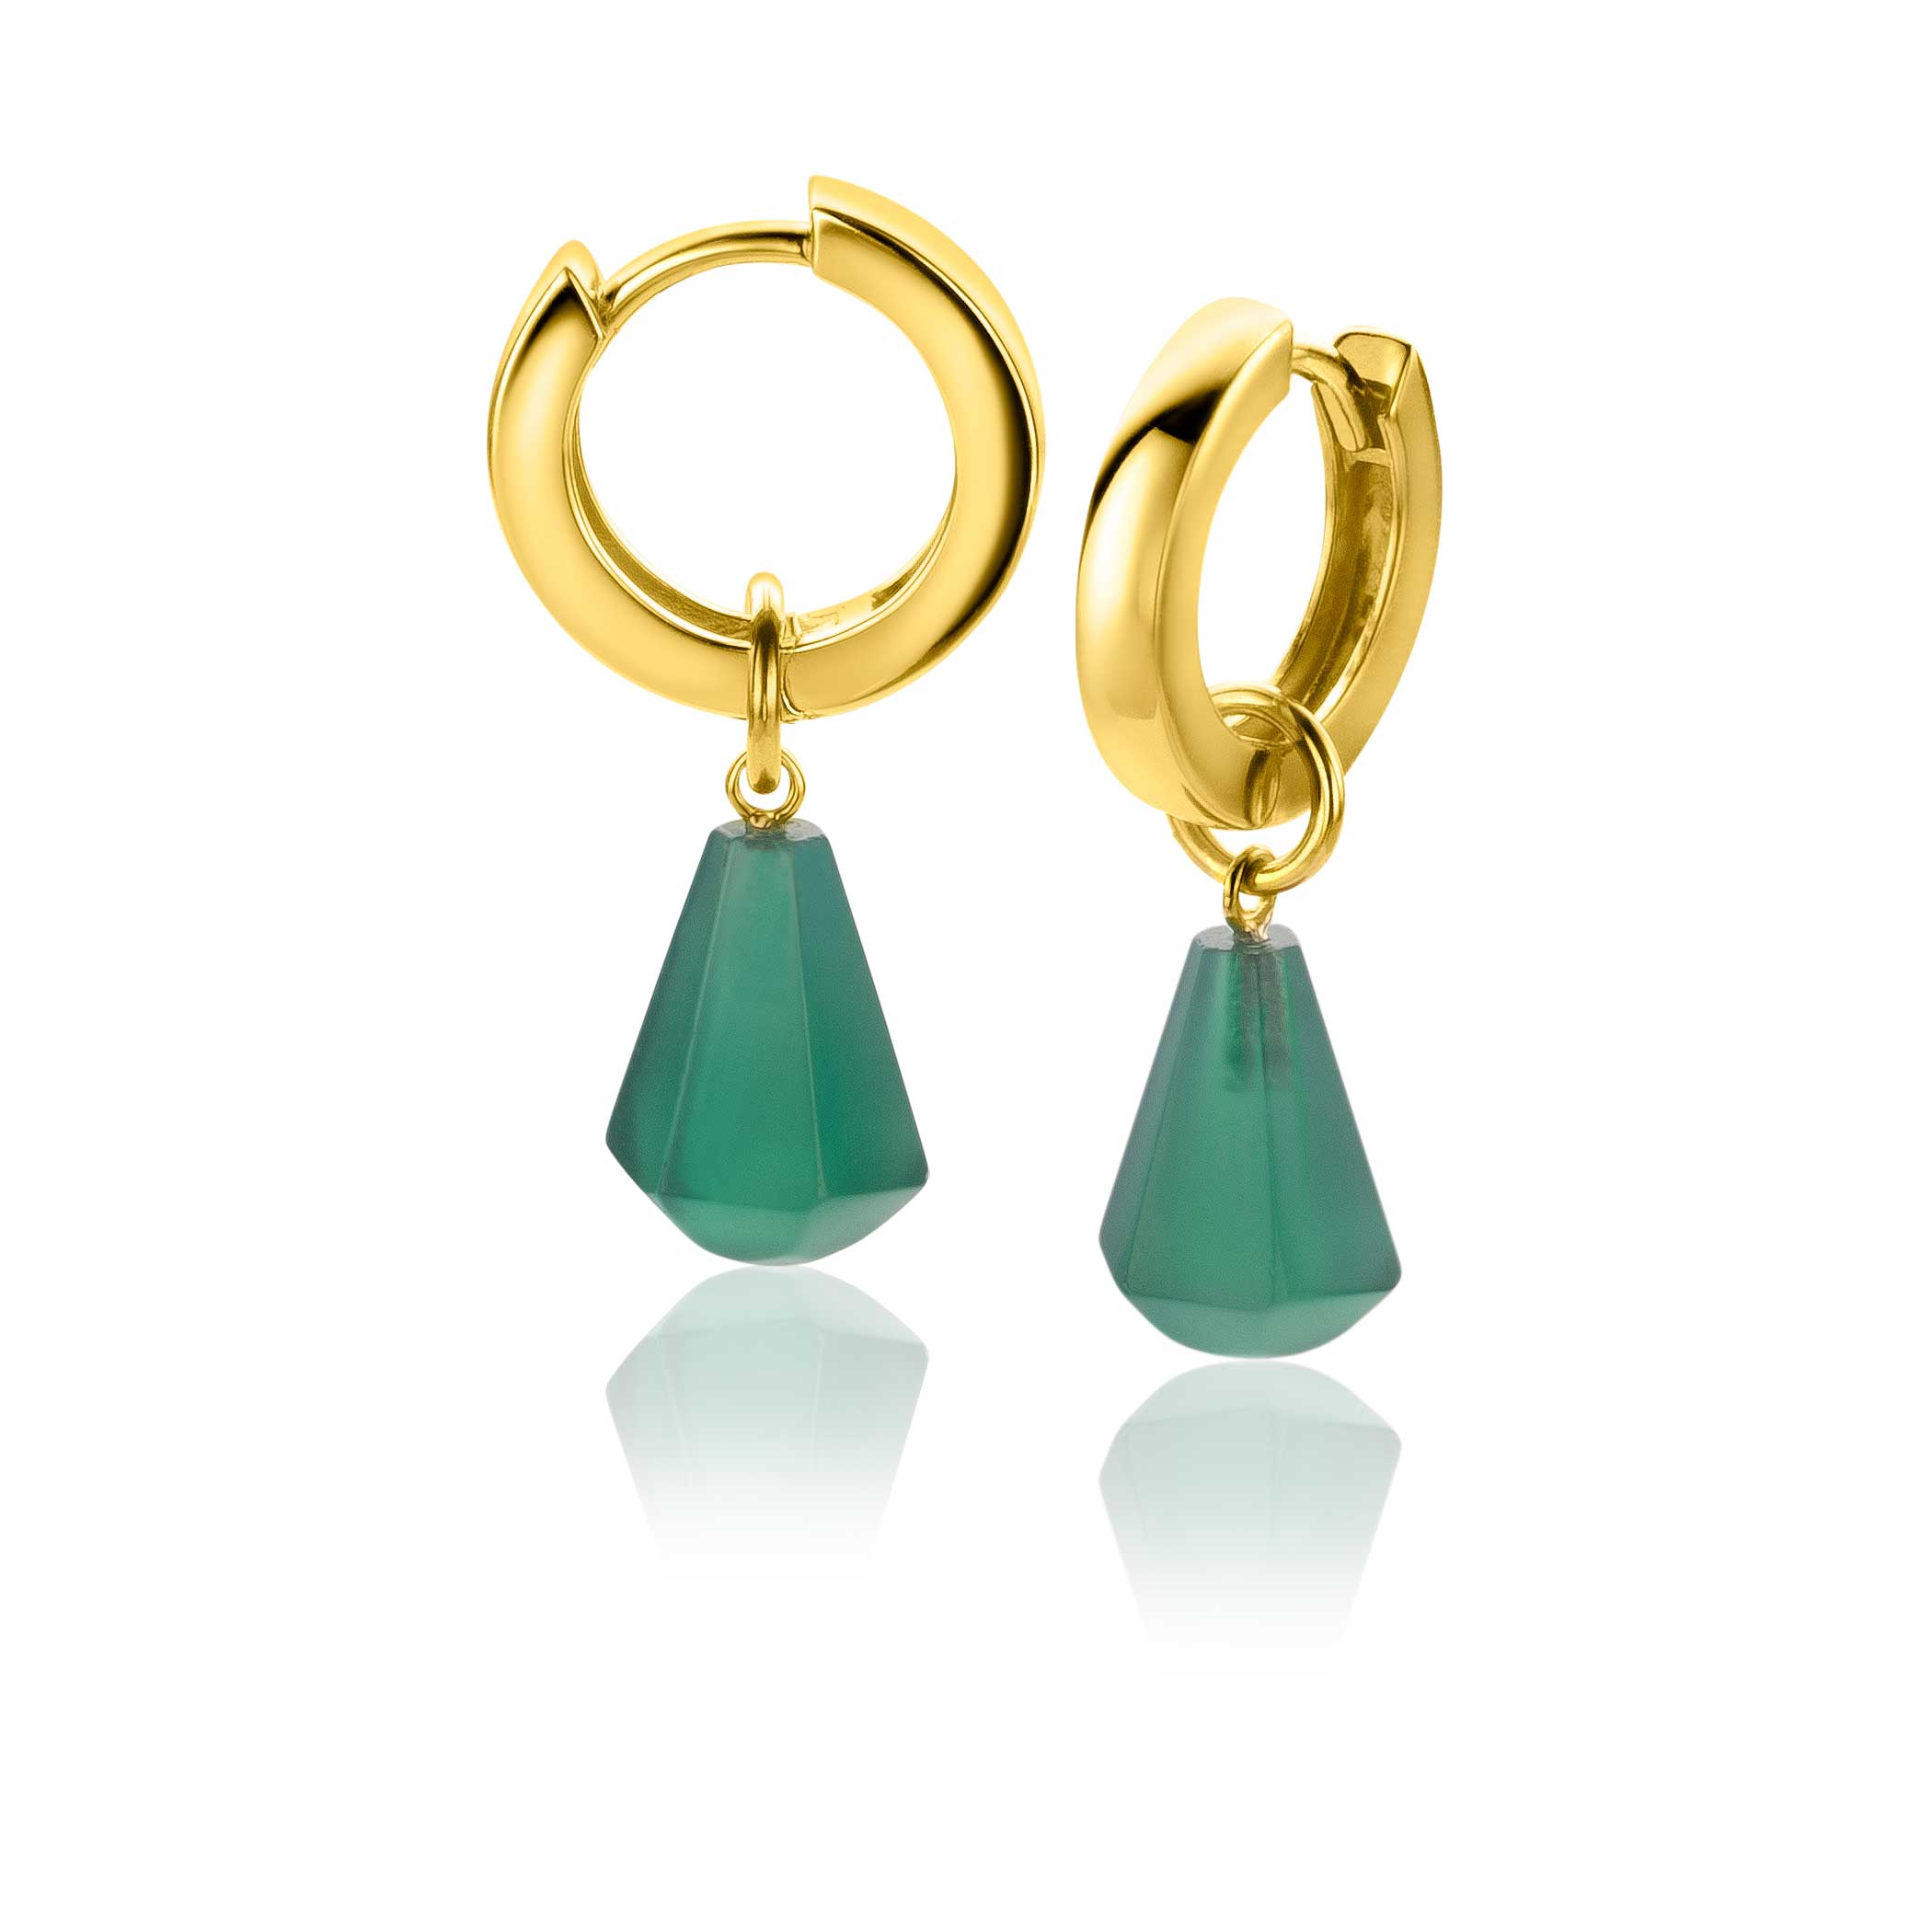 19mm ZINZI Gold Plated Sterling Silver Earrings Pendants Cone in Green Agate ZICH2256G (excl. hoop earrings)